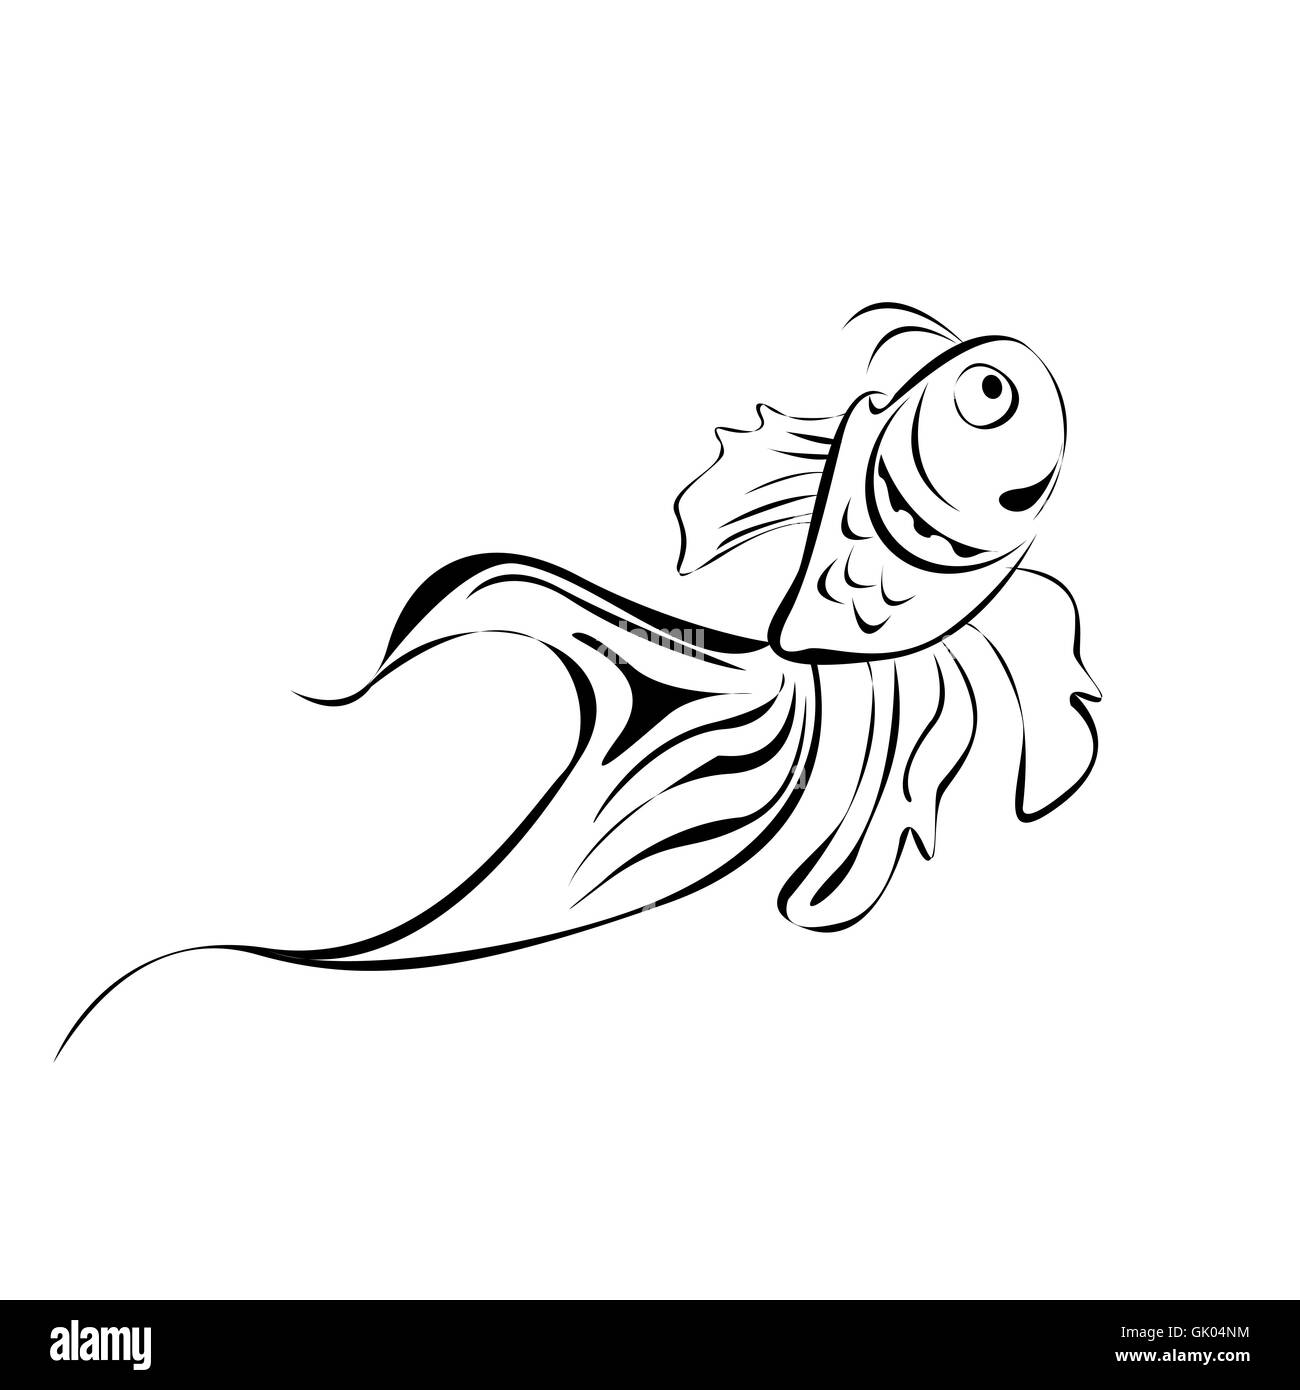 Line art fish Stock Photo